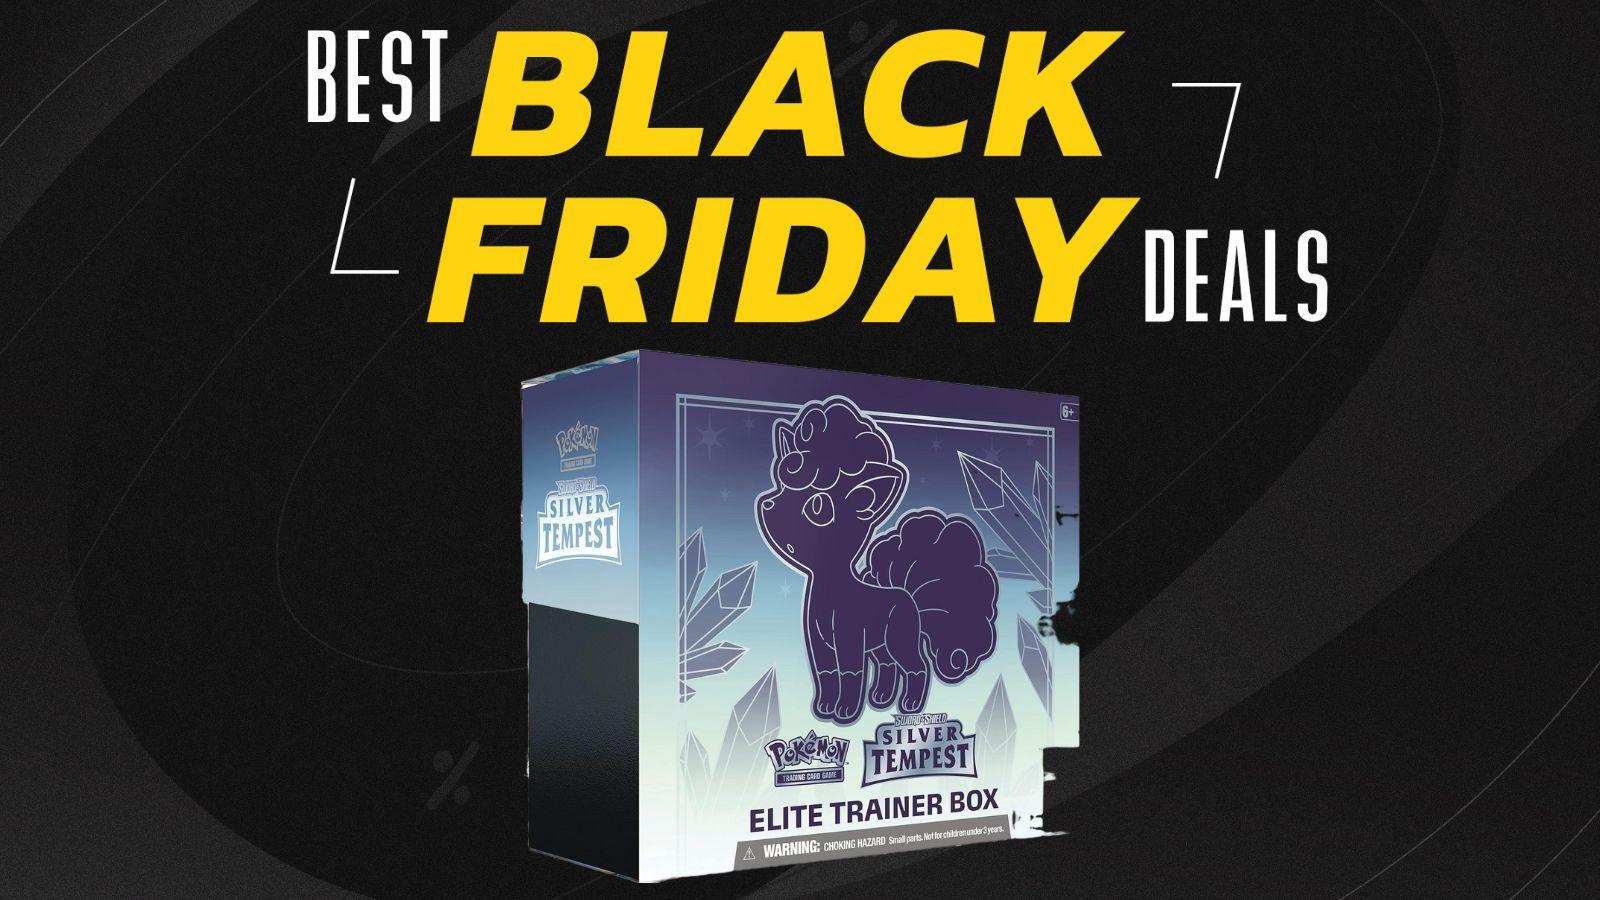 A Black Friday Deals banner, underneath is a Pokemon Elite Trainer Box featuring art of an Alolan Vulpix